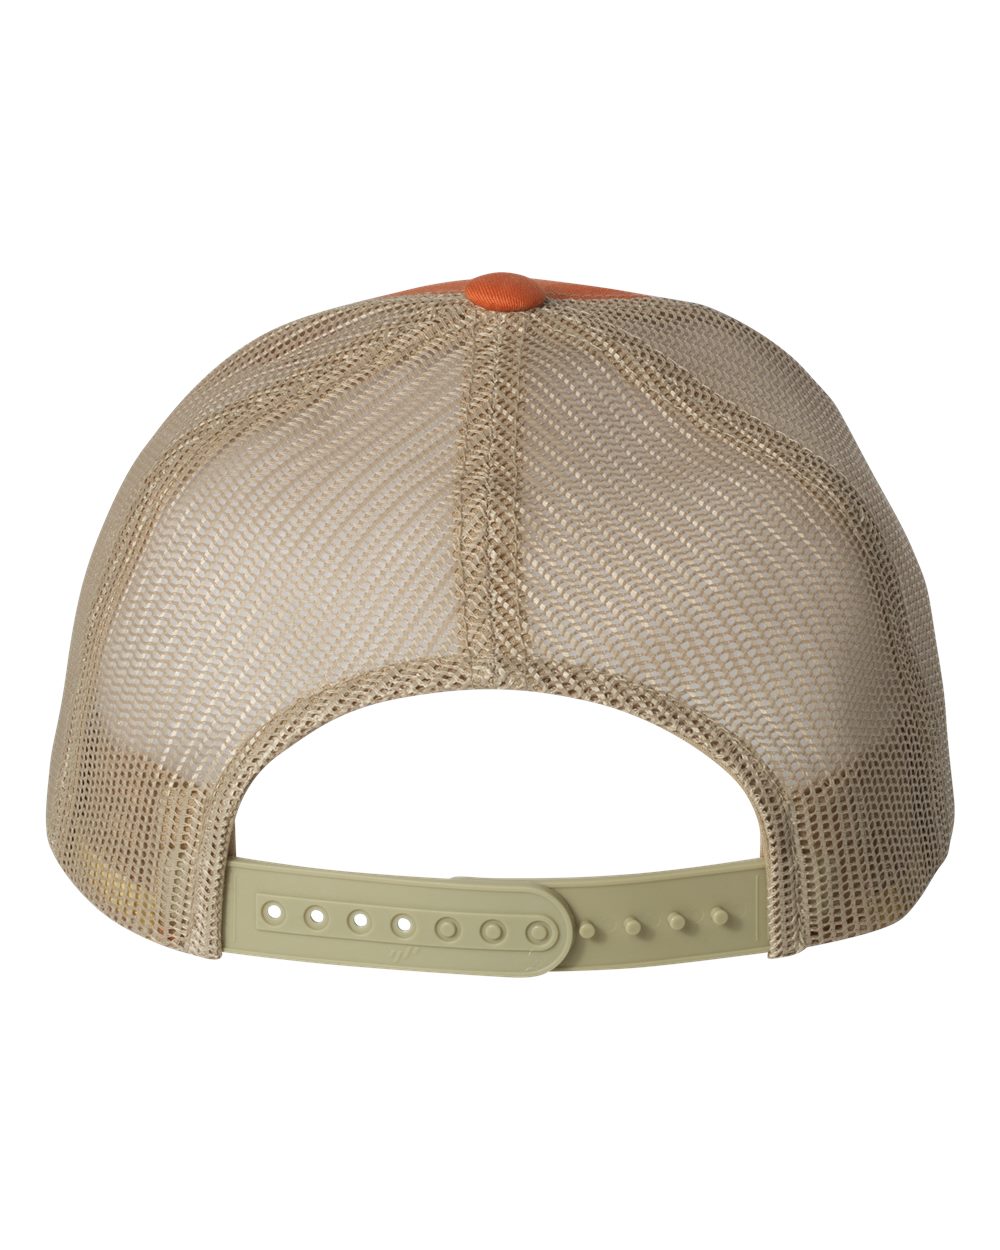 Northern Lights Patch Retro Trucker Hat - Snapback - Orange (Khaki)